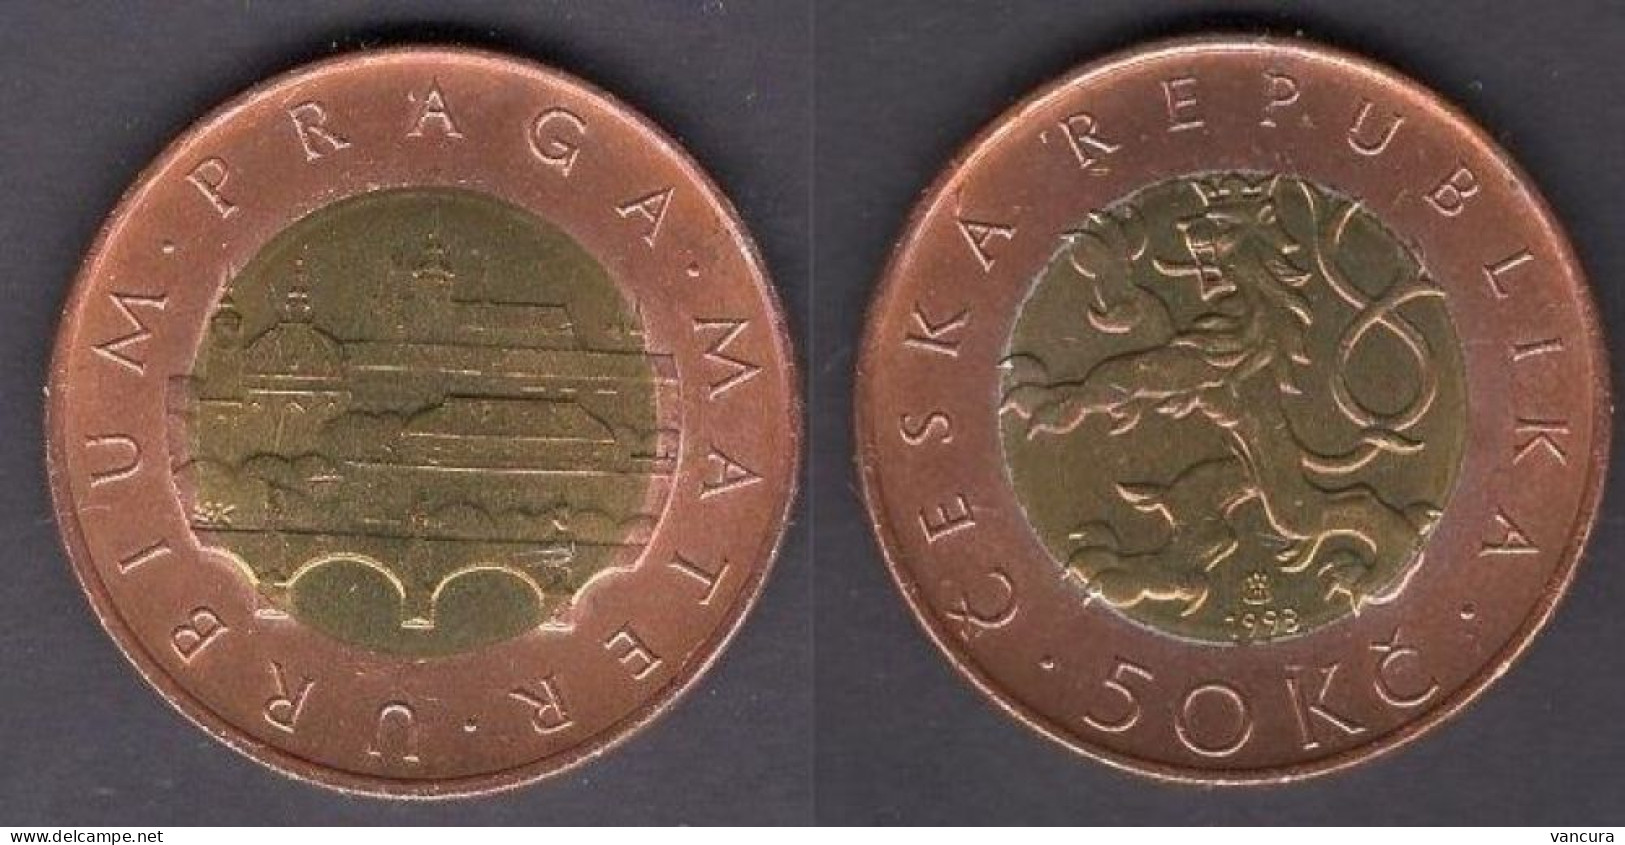 Czech Republic 50 Kc Coin 1993 BIMETALLIC Coin - Repubblica Ceca